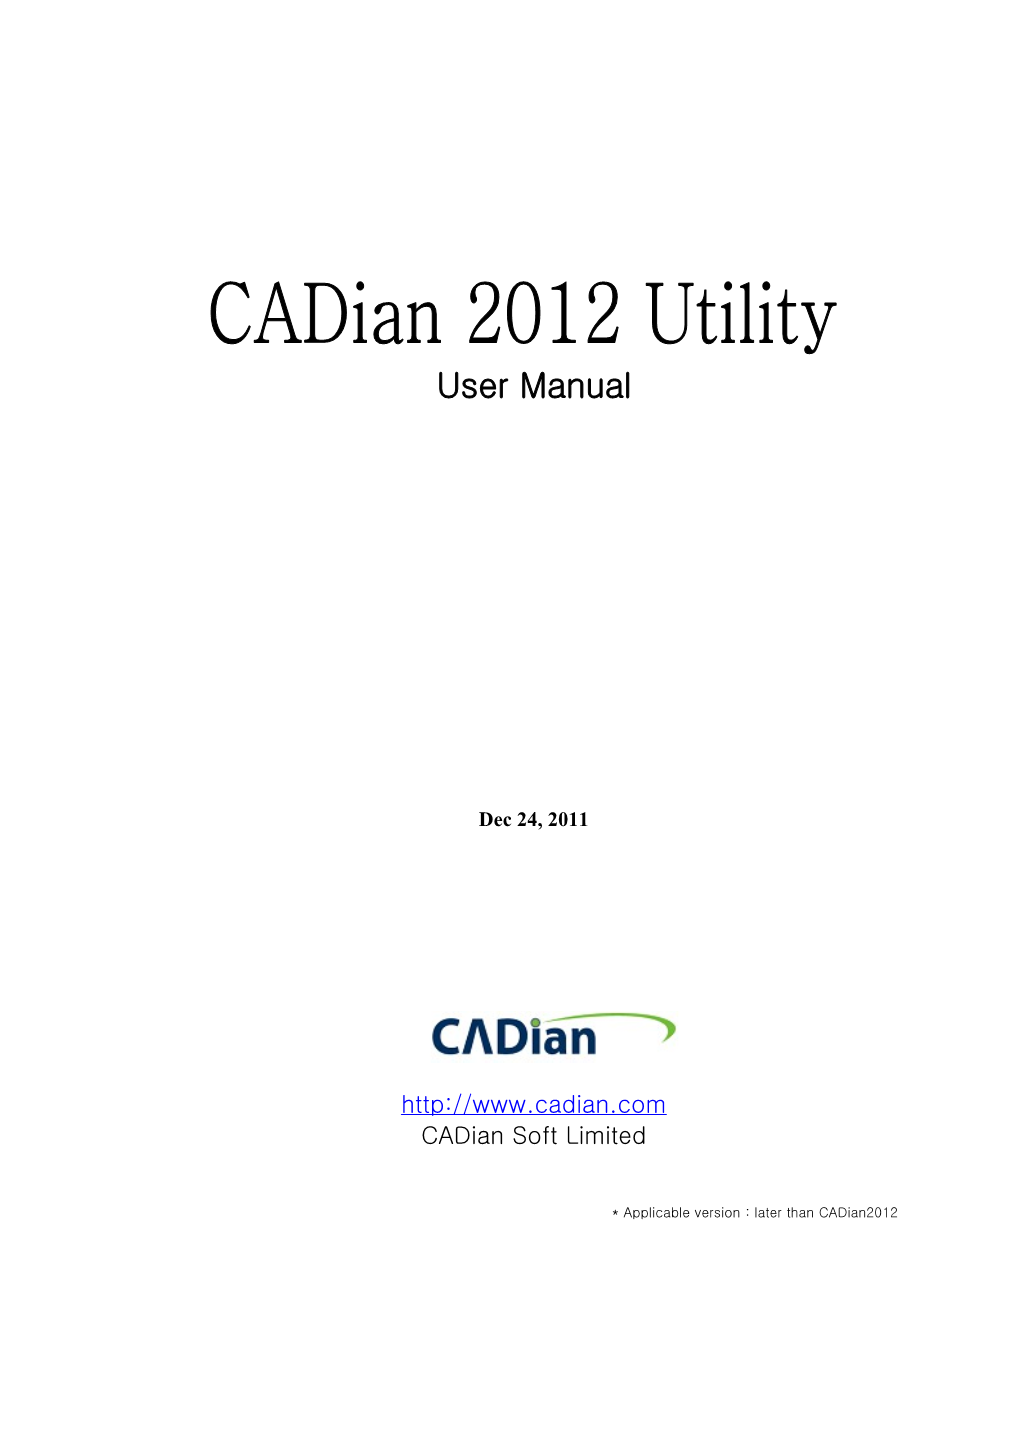 Cadian 2012 Utility